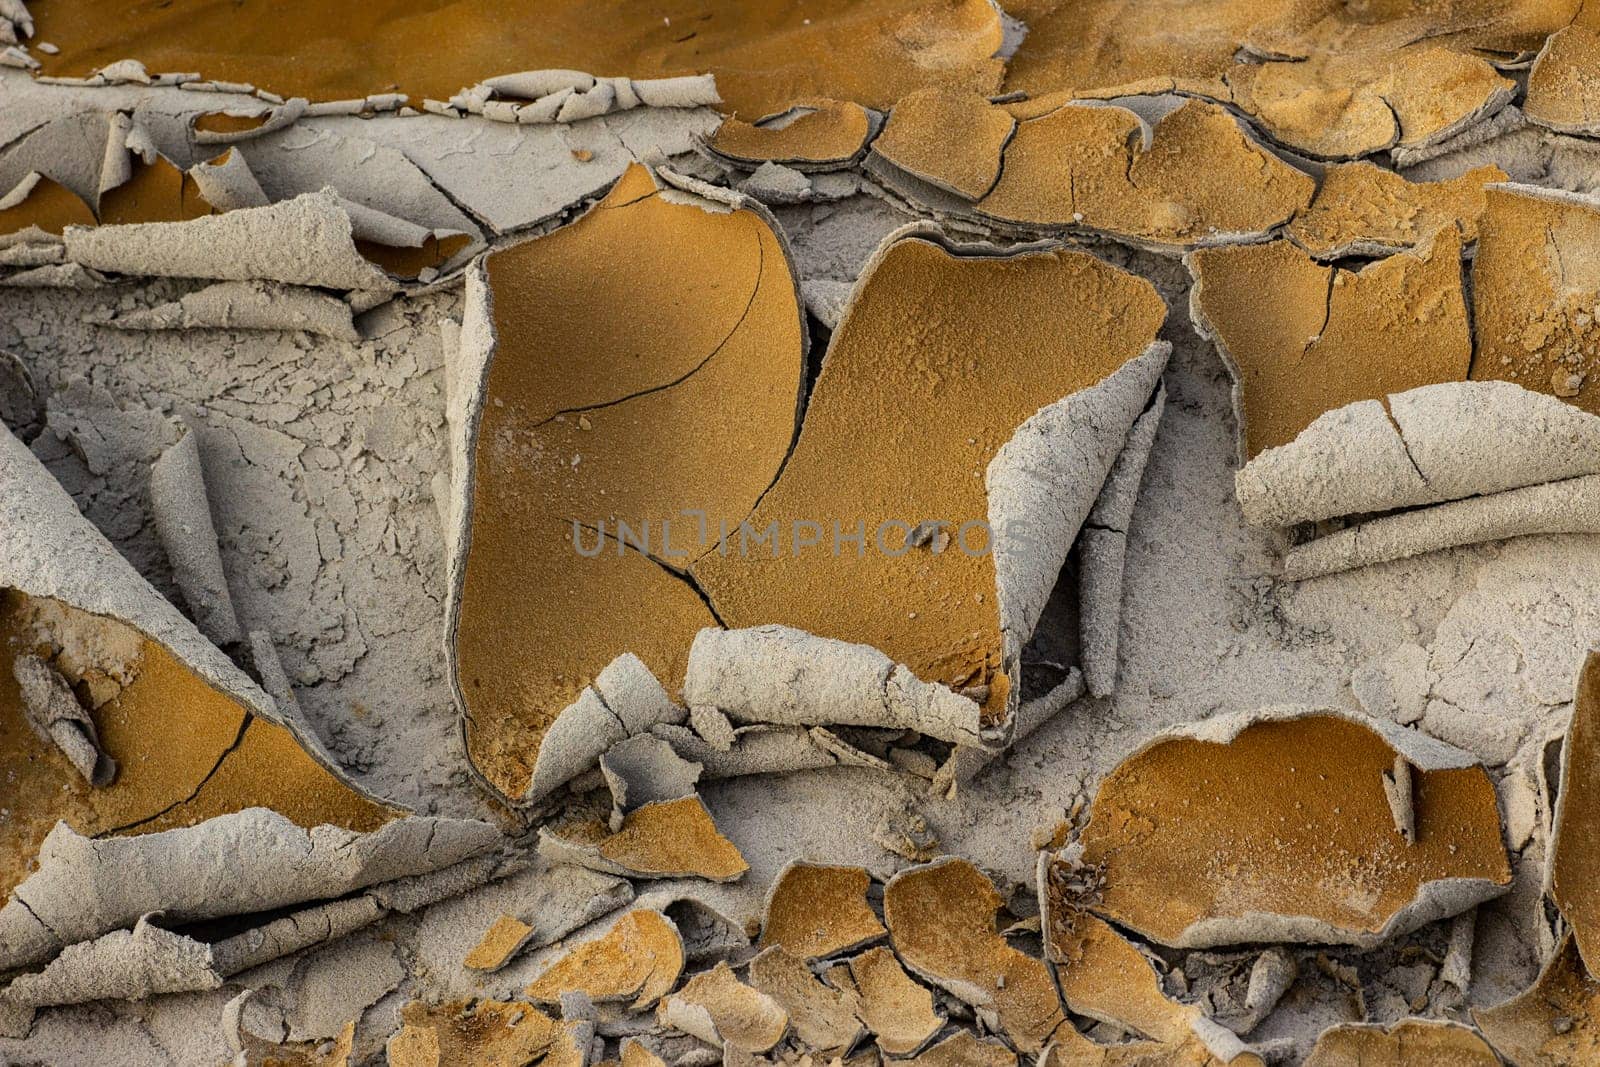 Cracked dry ground sand. Texture, background by lanart